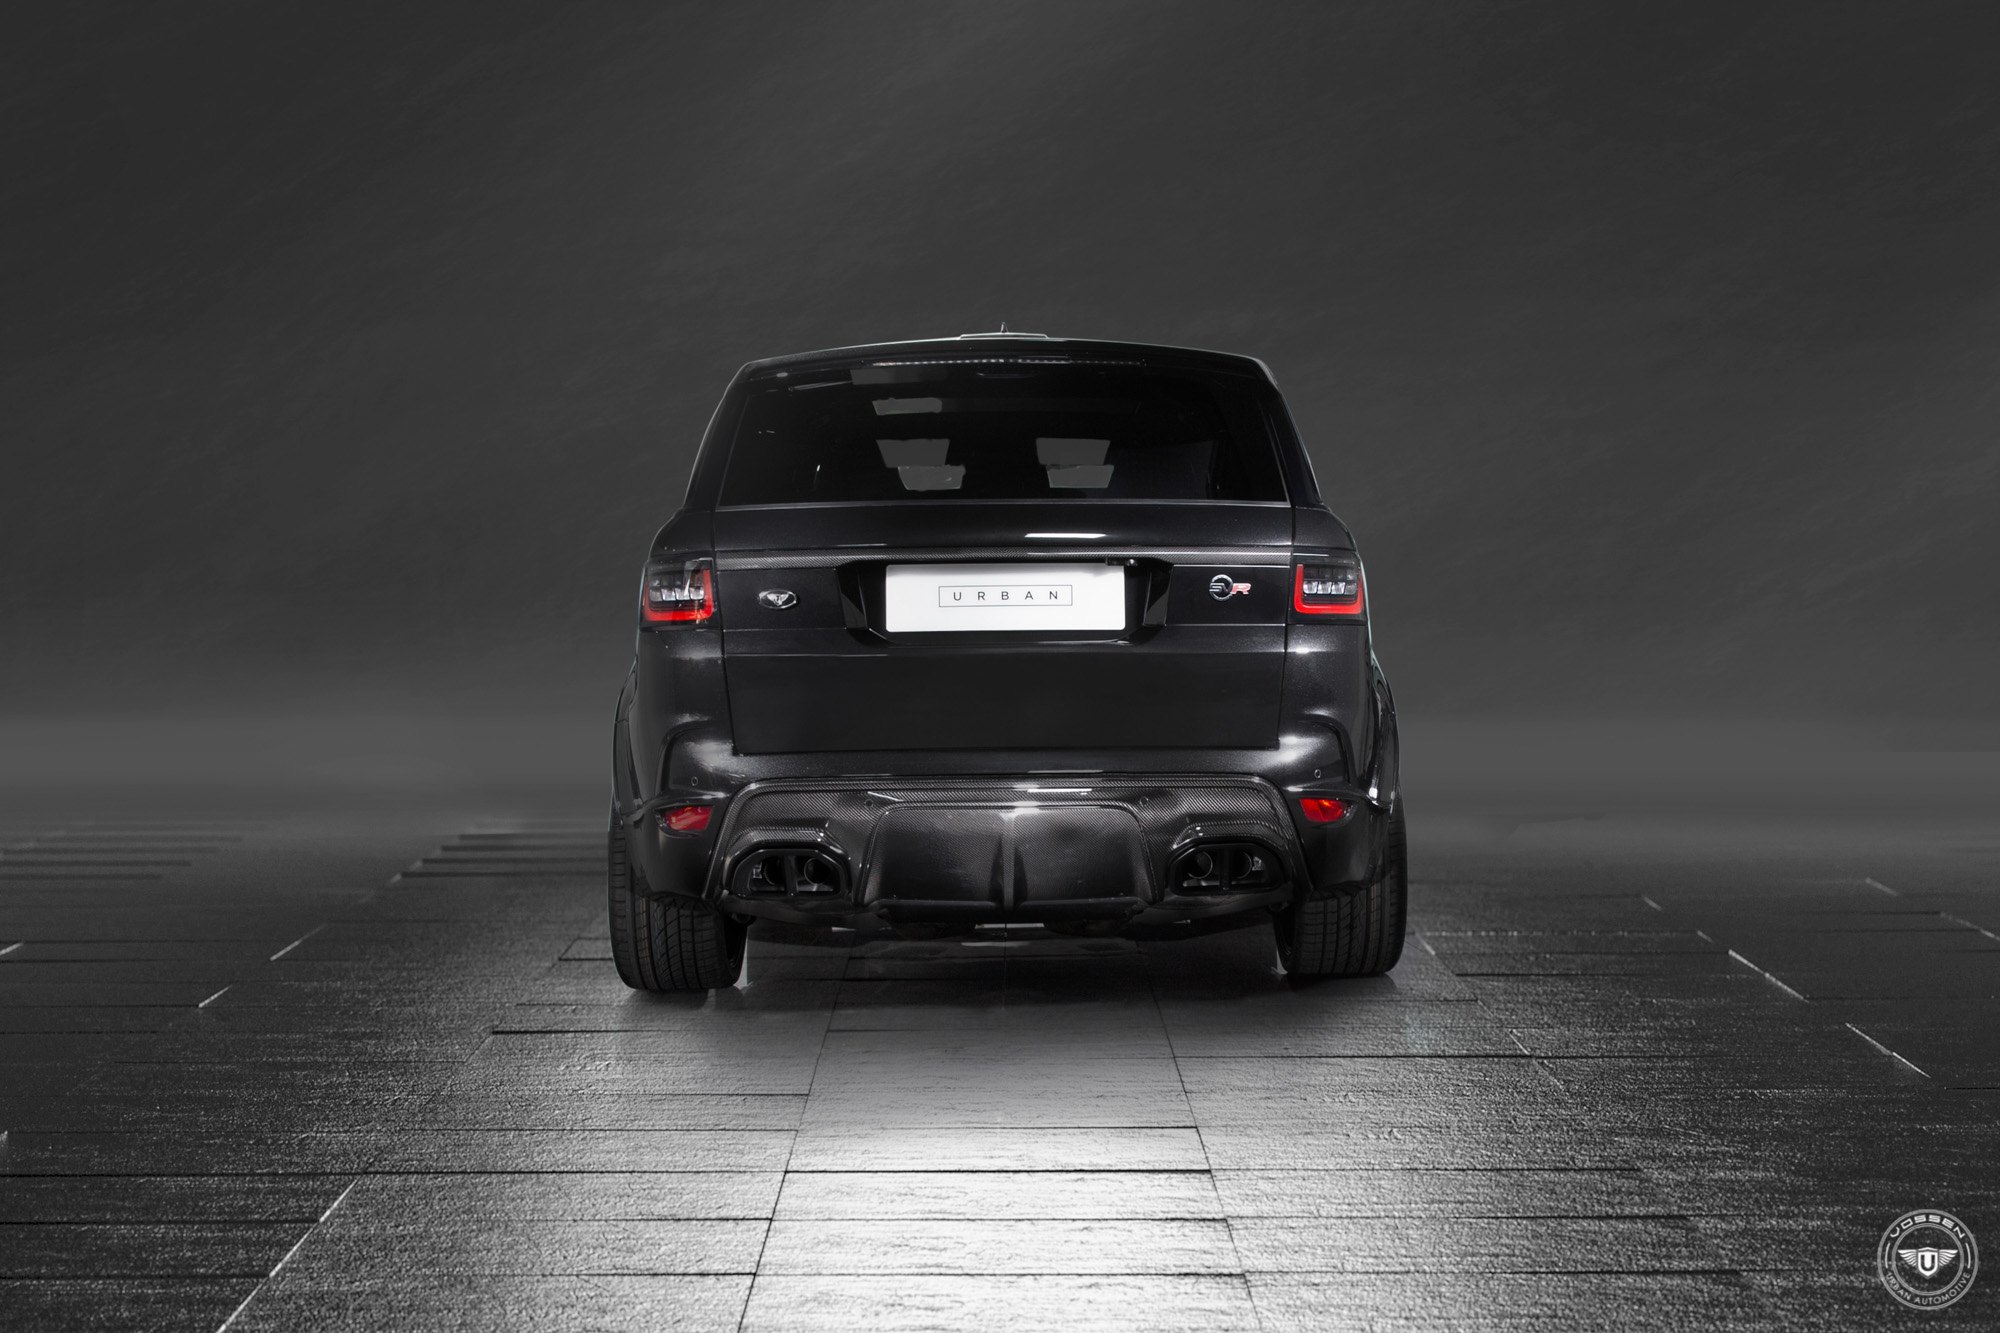 Carbon Fiber Rear Difuser on Black Range Rover Sport - Photo by Vossen